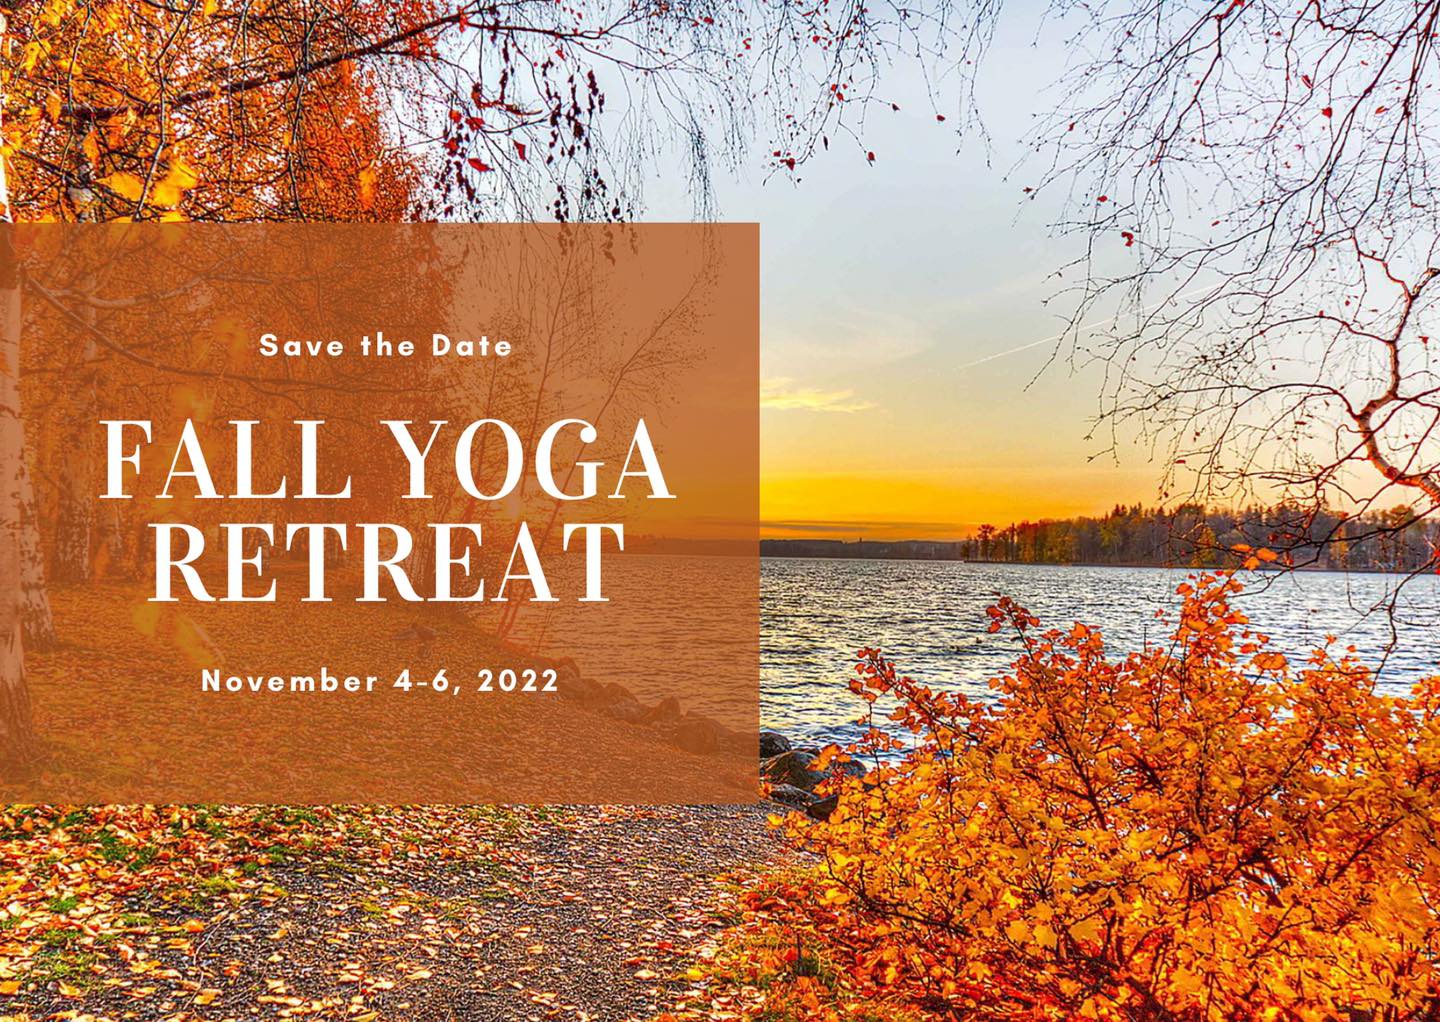 Fall Yoga Retreat November 4-6, 2022